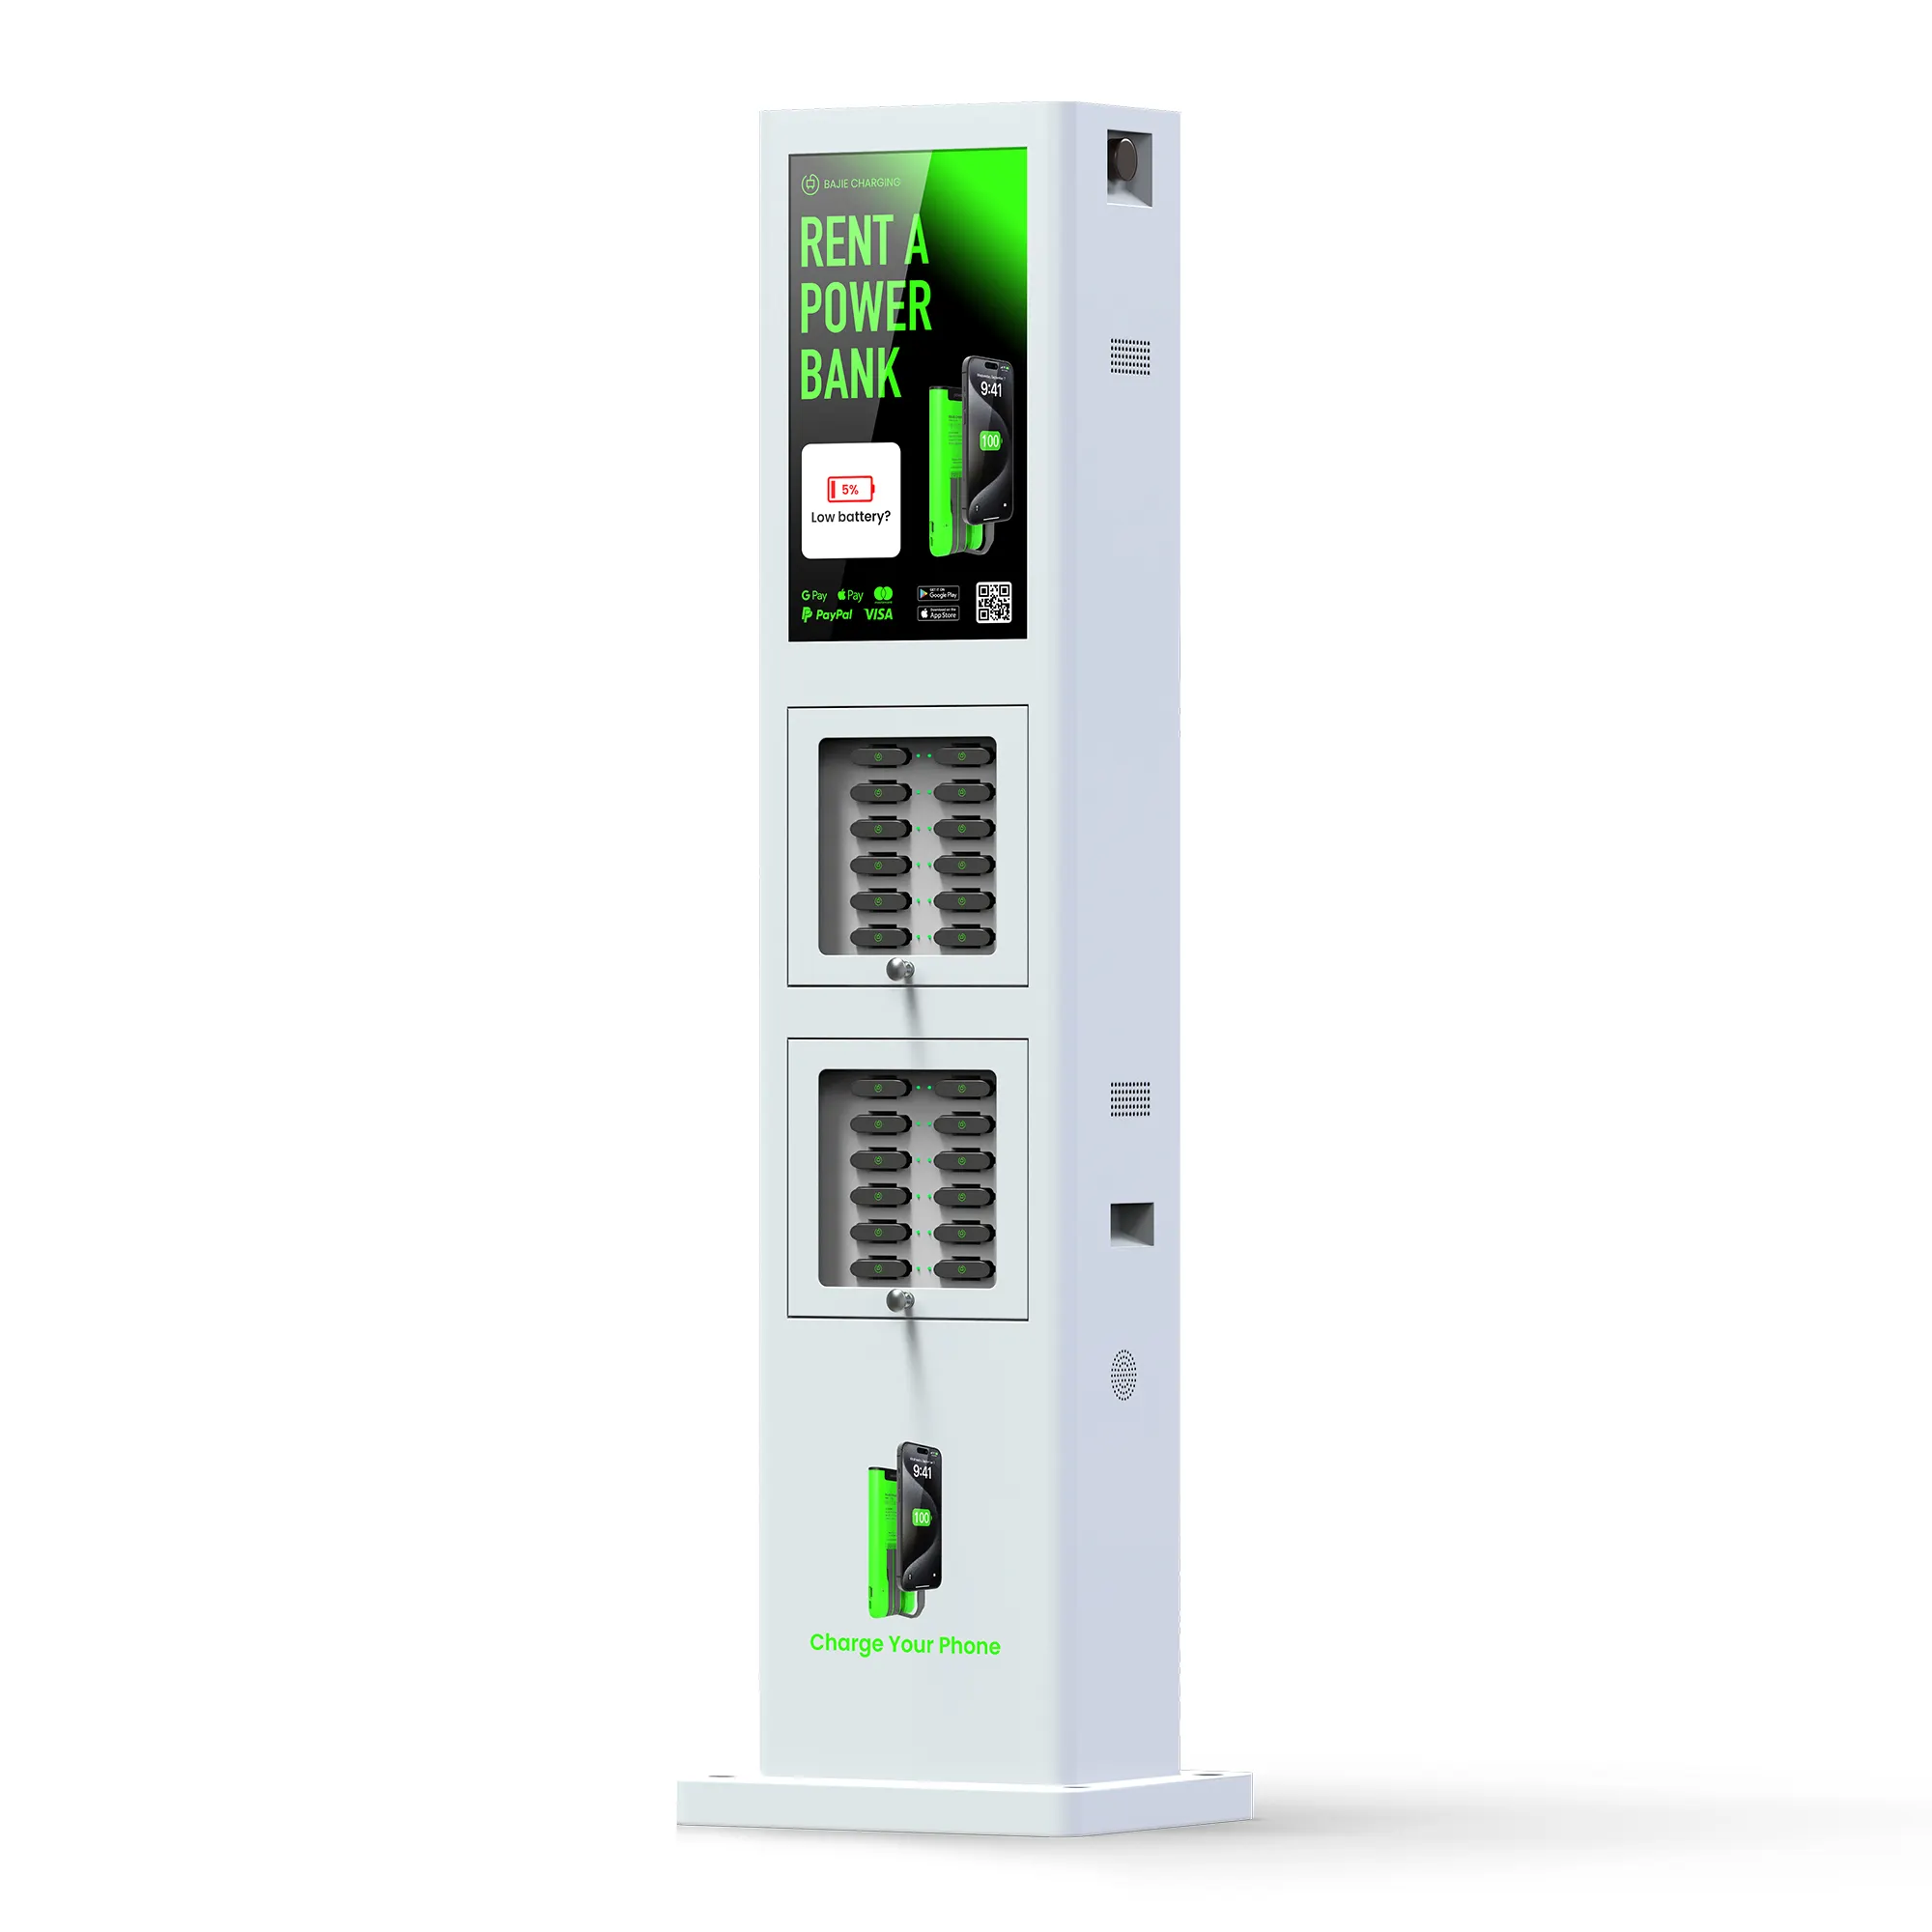 4g waterproof share powerbank rental station rainproof rental station phone charging vending station